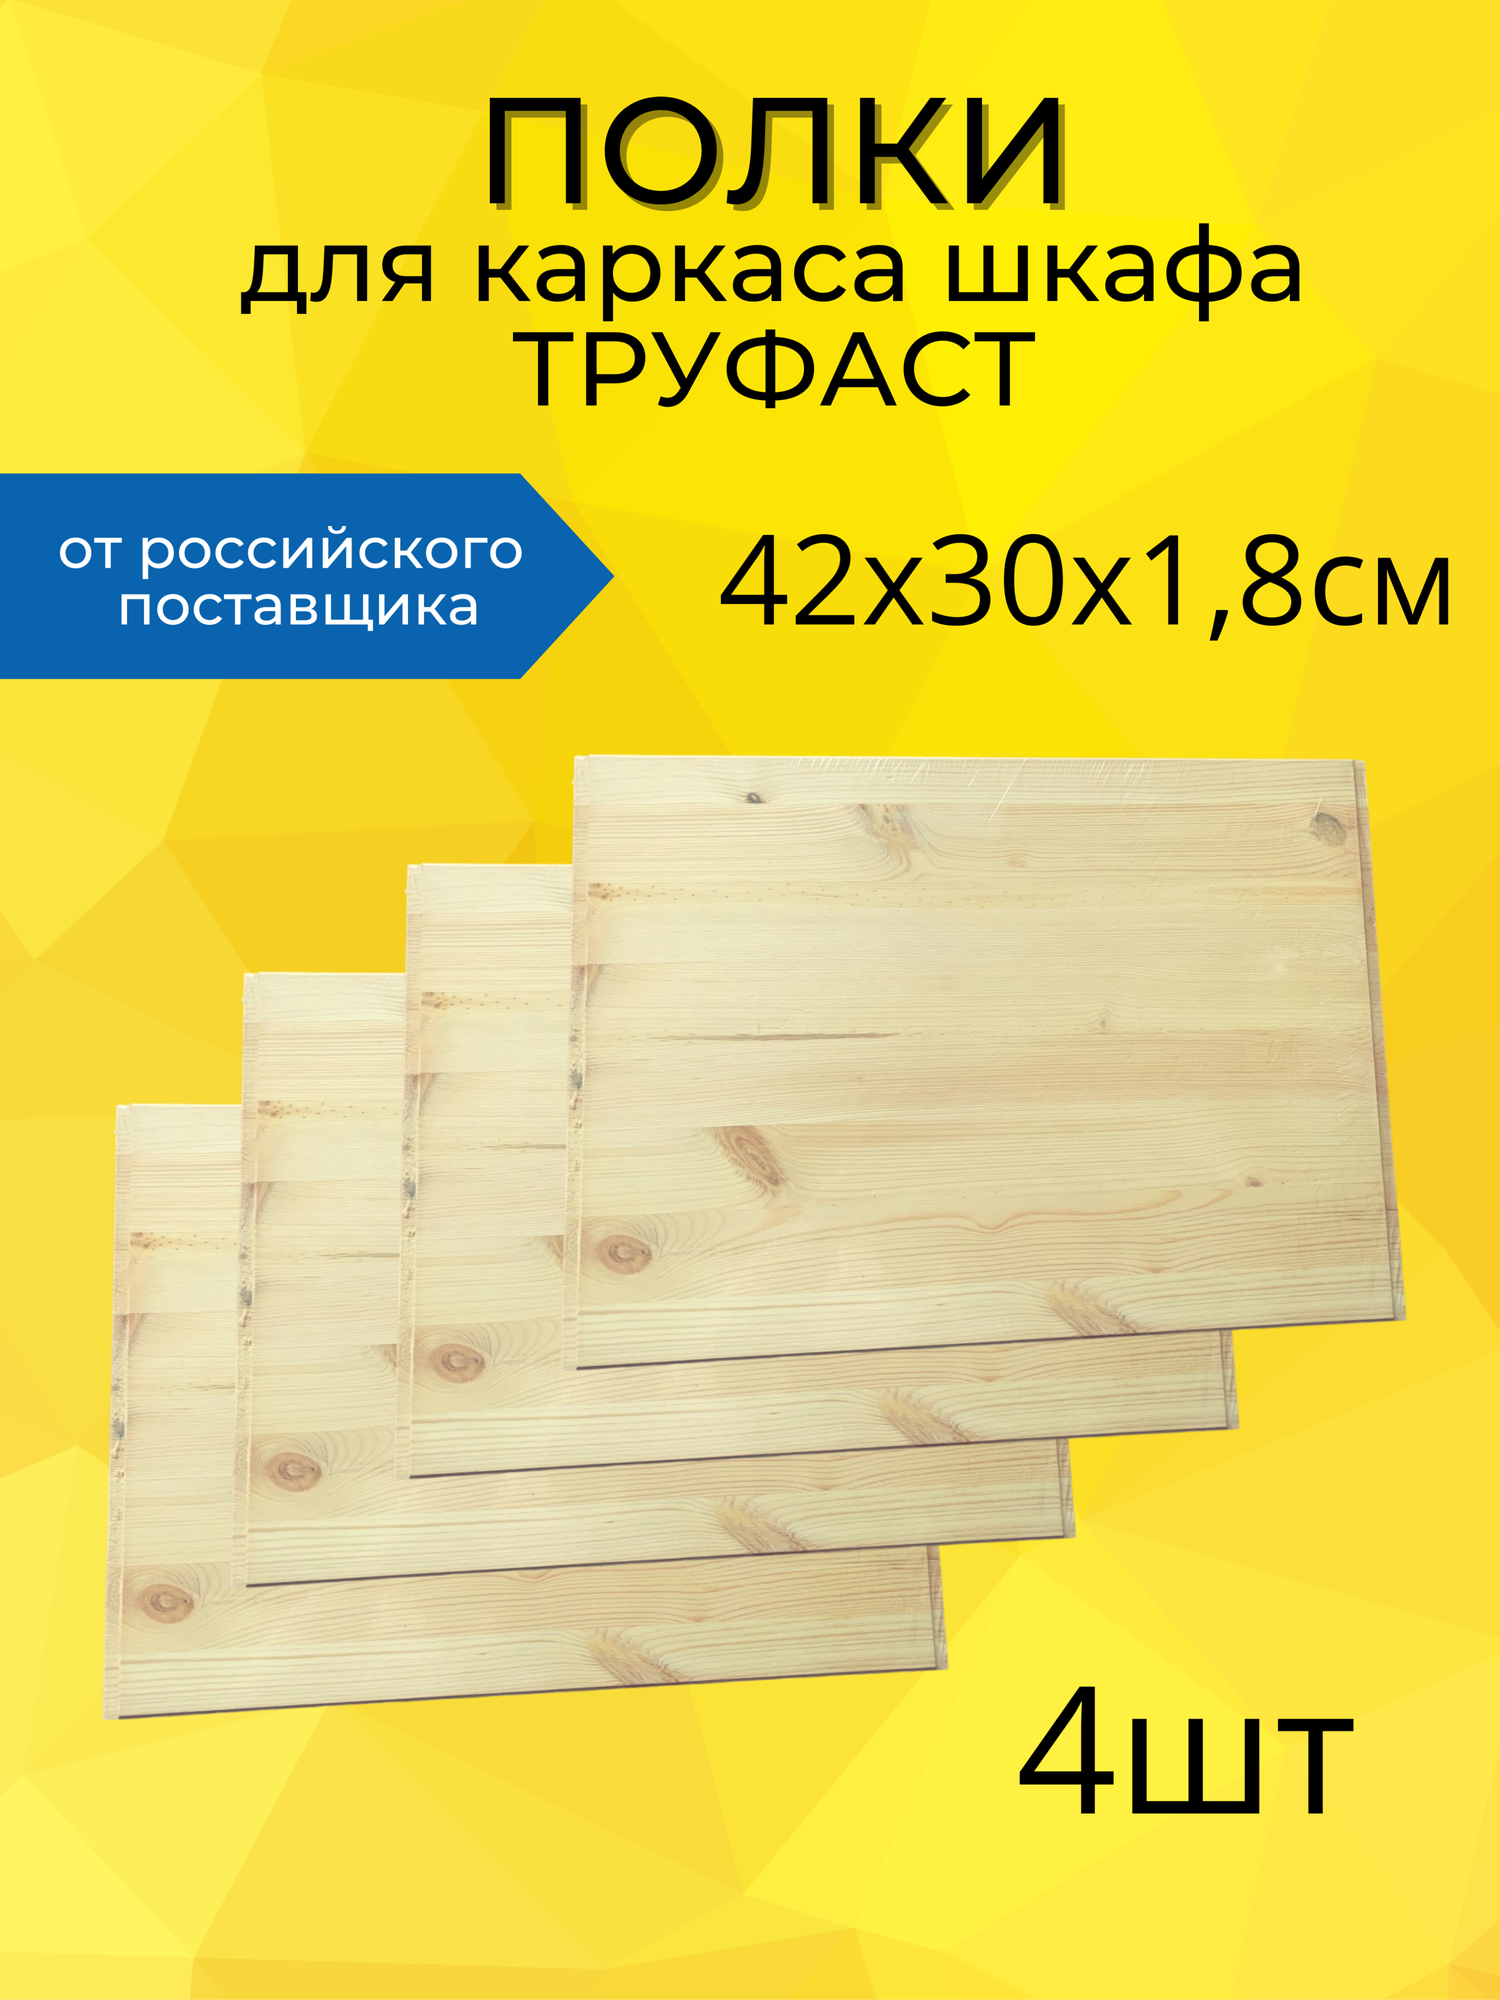 Полка деревянная для каркаса шкафа Труфаст, 42х30х1.8 см, 4 шт